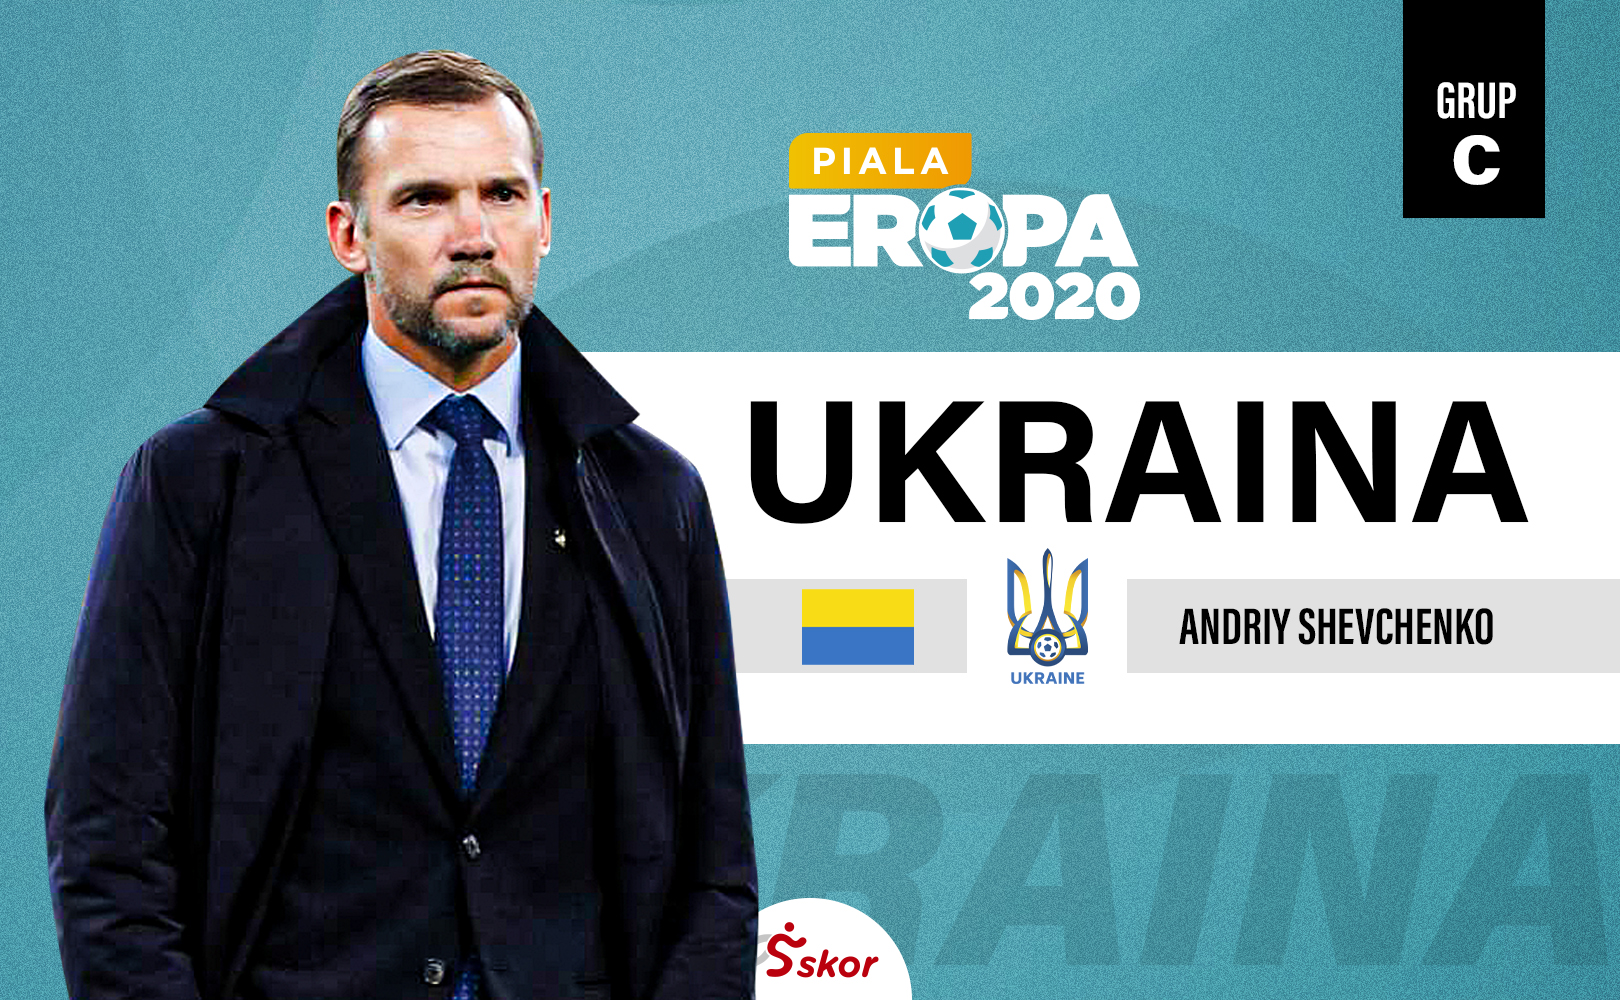 Profil Tim Piala Eropa 2020 - Ukraina: Menanti Magis Andriy Shevchenko